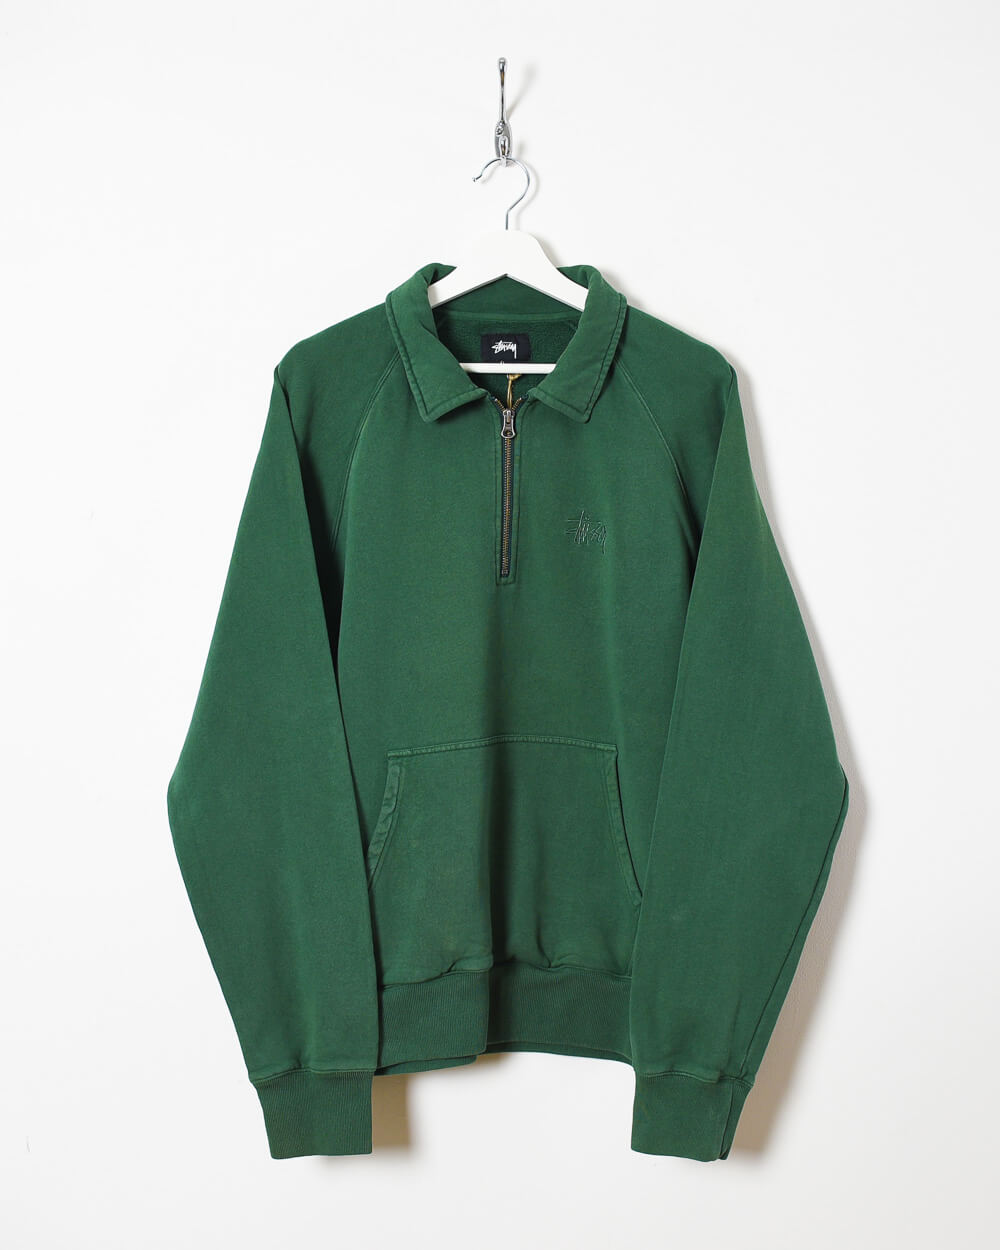 Green Stussy 1/4 Zip Sweatshirt - Large